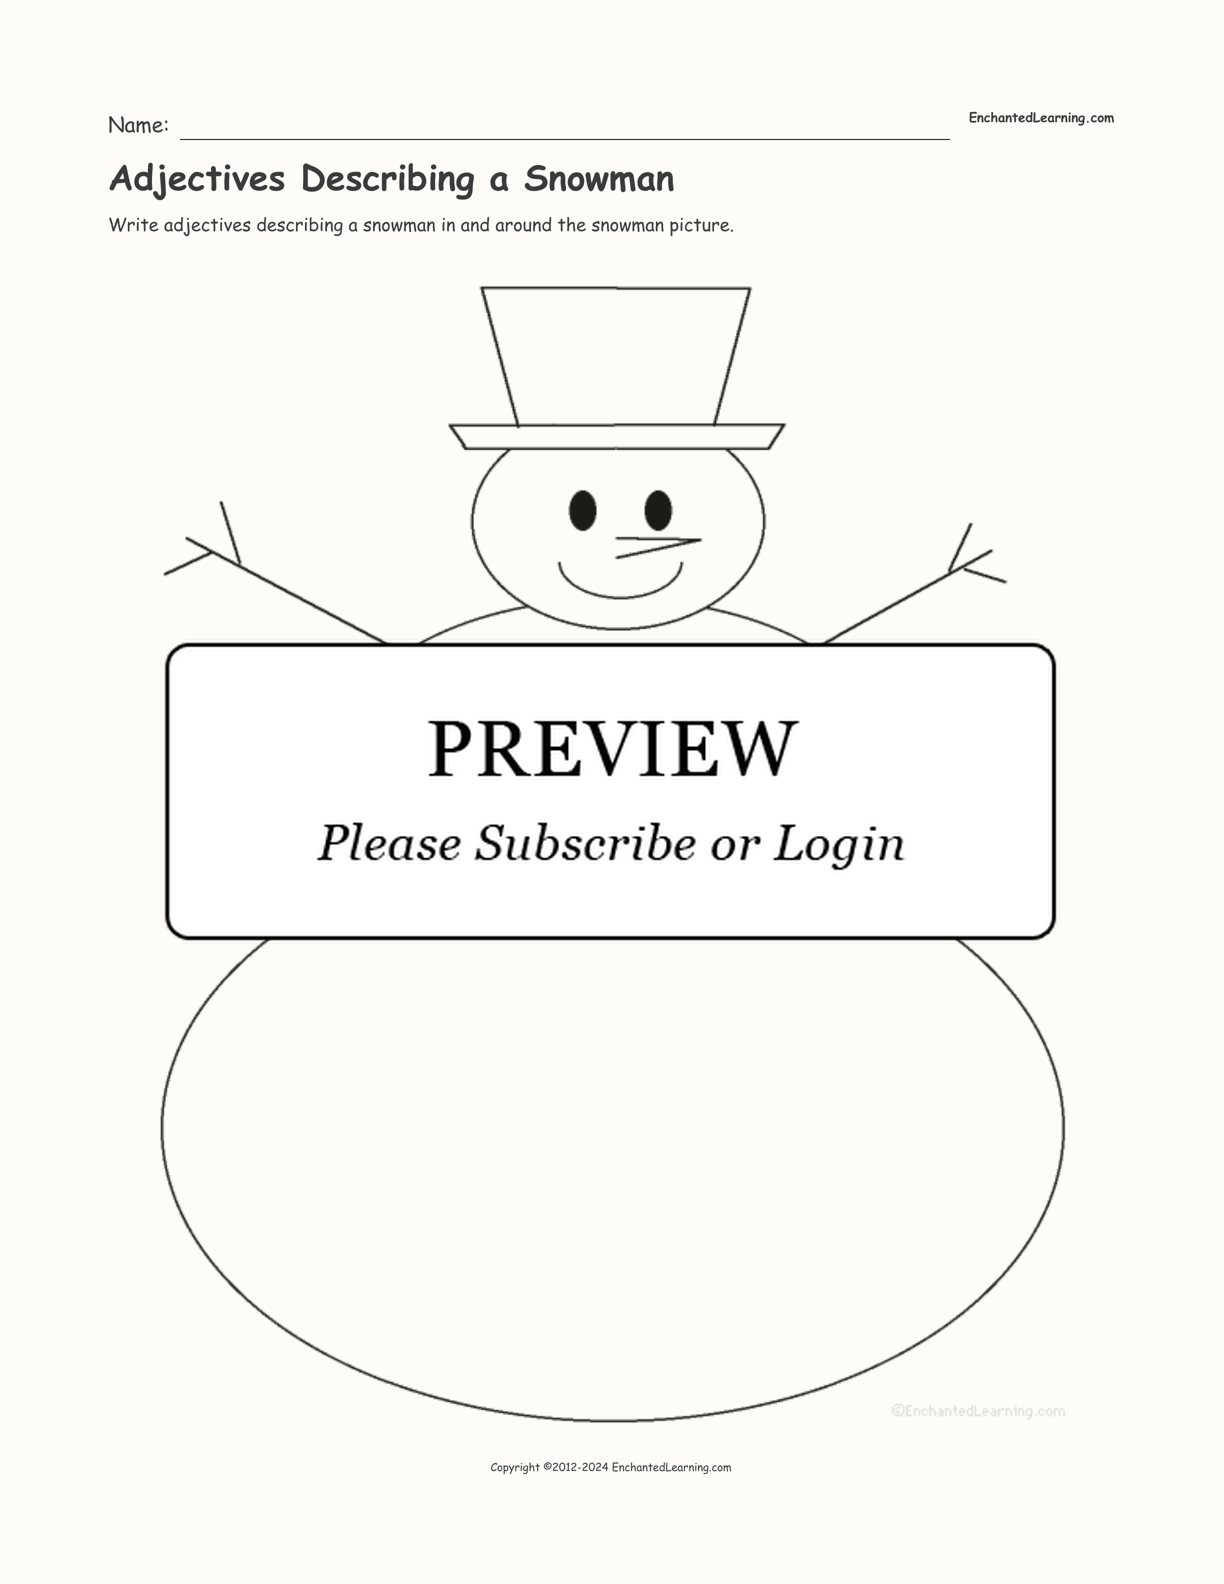 Adjectives Describing a Snowman interactive worksheet page 1